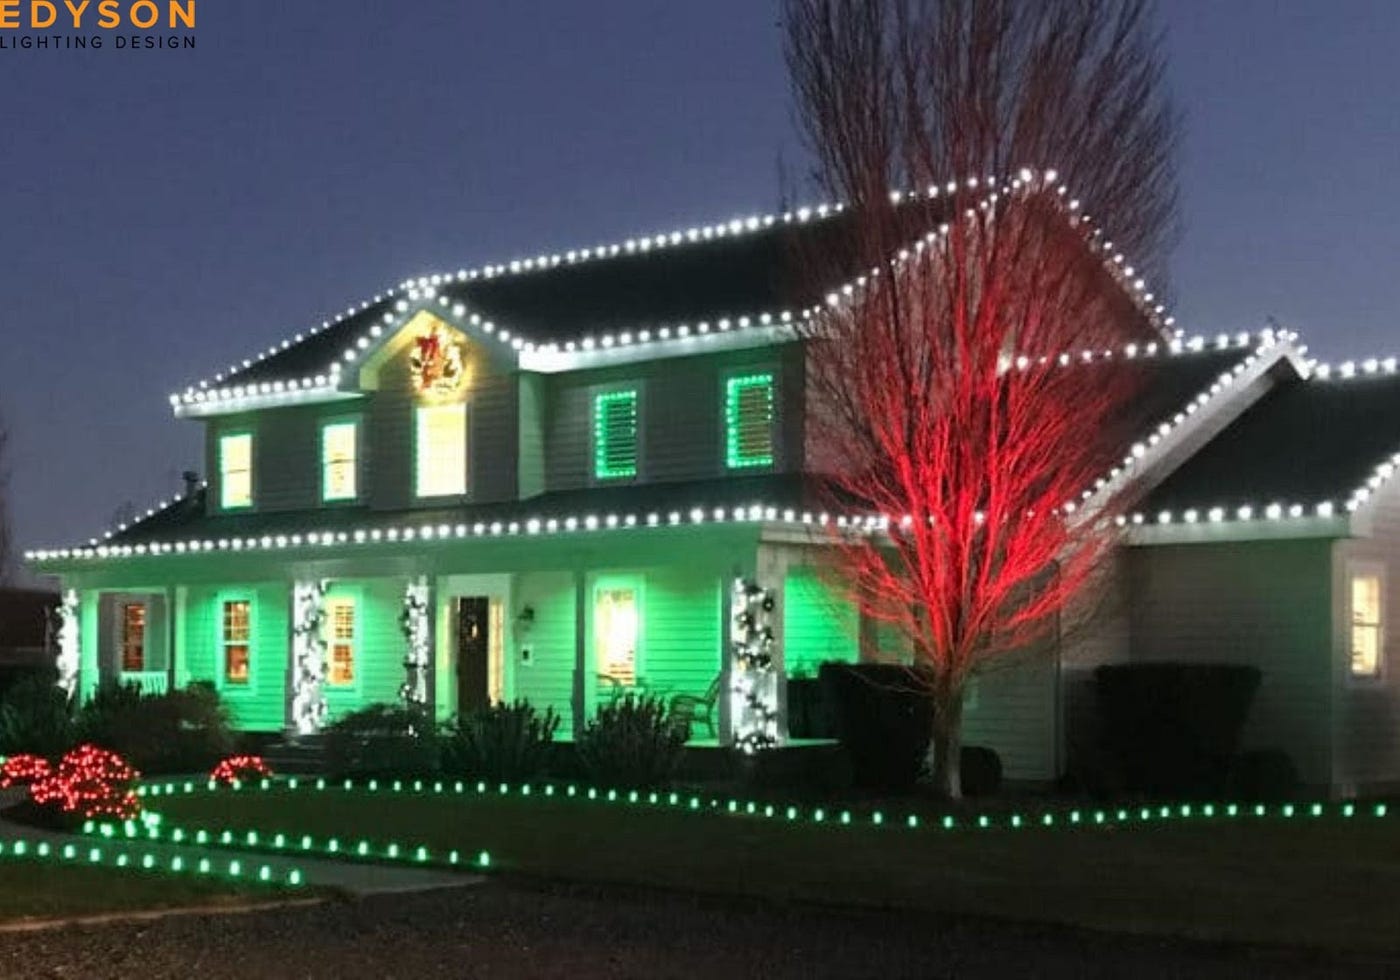 How to get Christmas Light Installation? | by Edysonlightingdesign | Medium